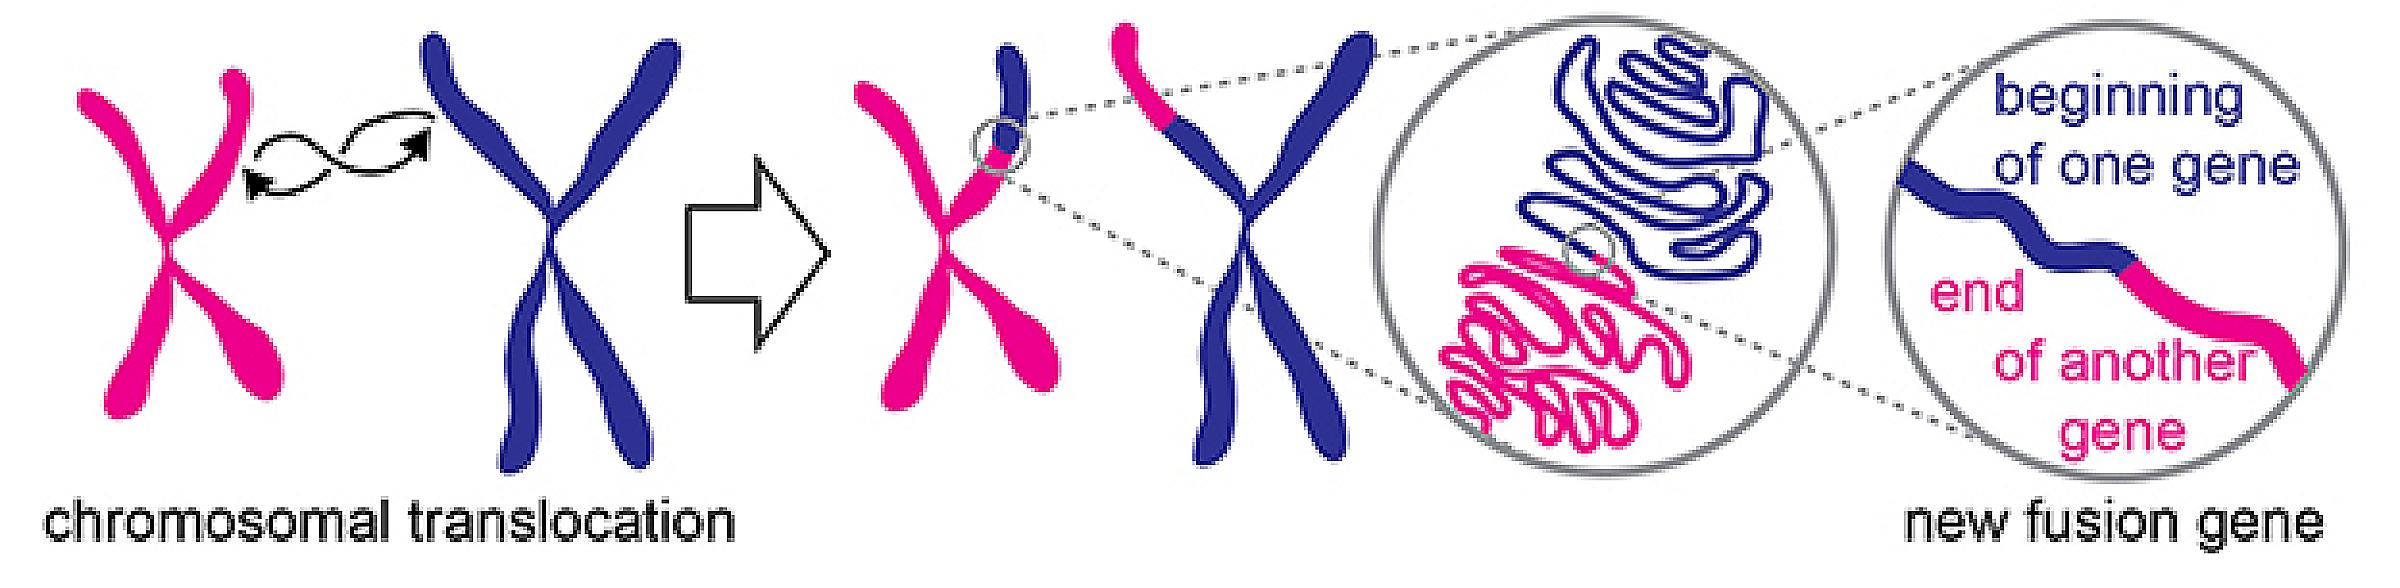 Diagram of chromosomal translocation